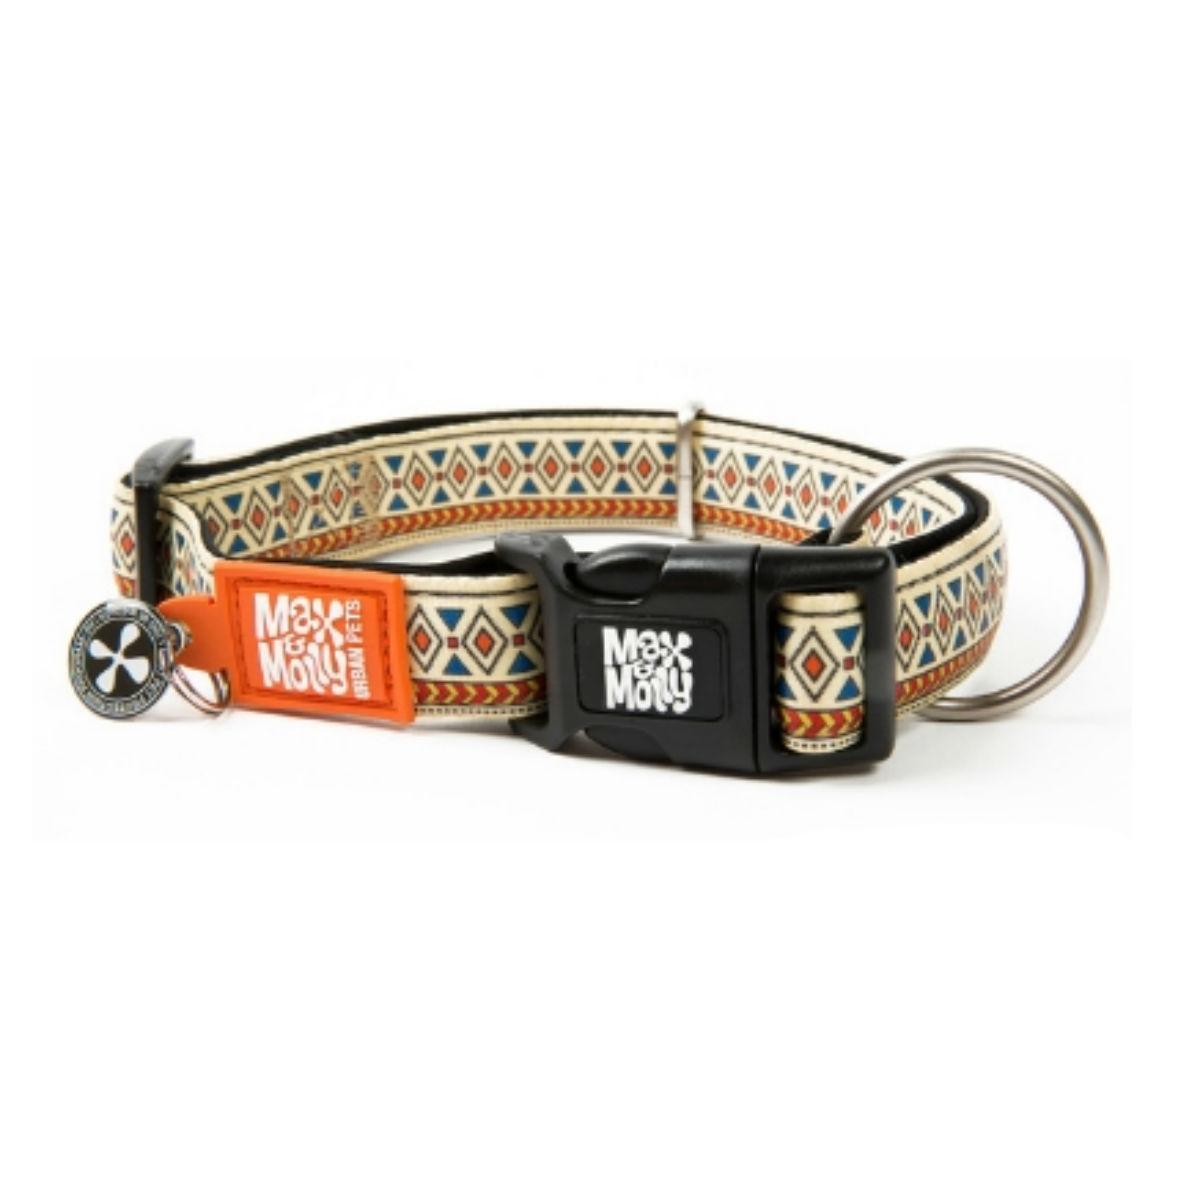 Max & Molly Smart ID Dog Collar - Mosaic/Ethnic